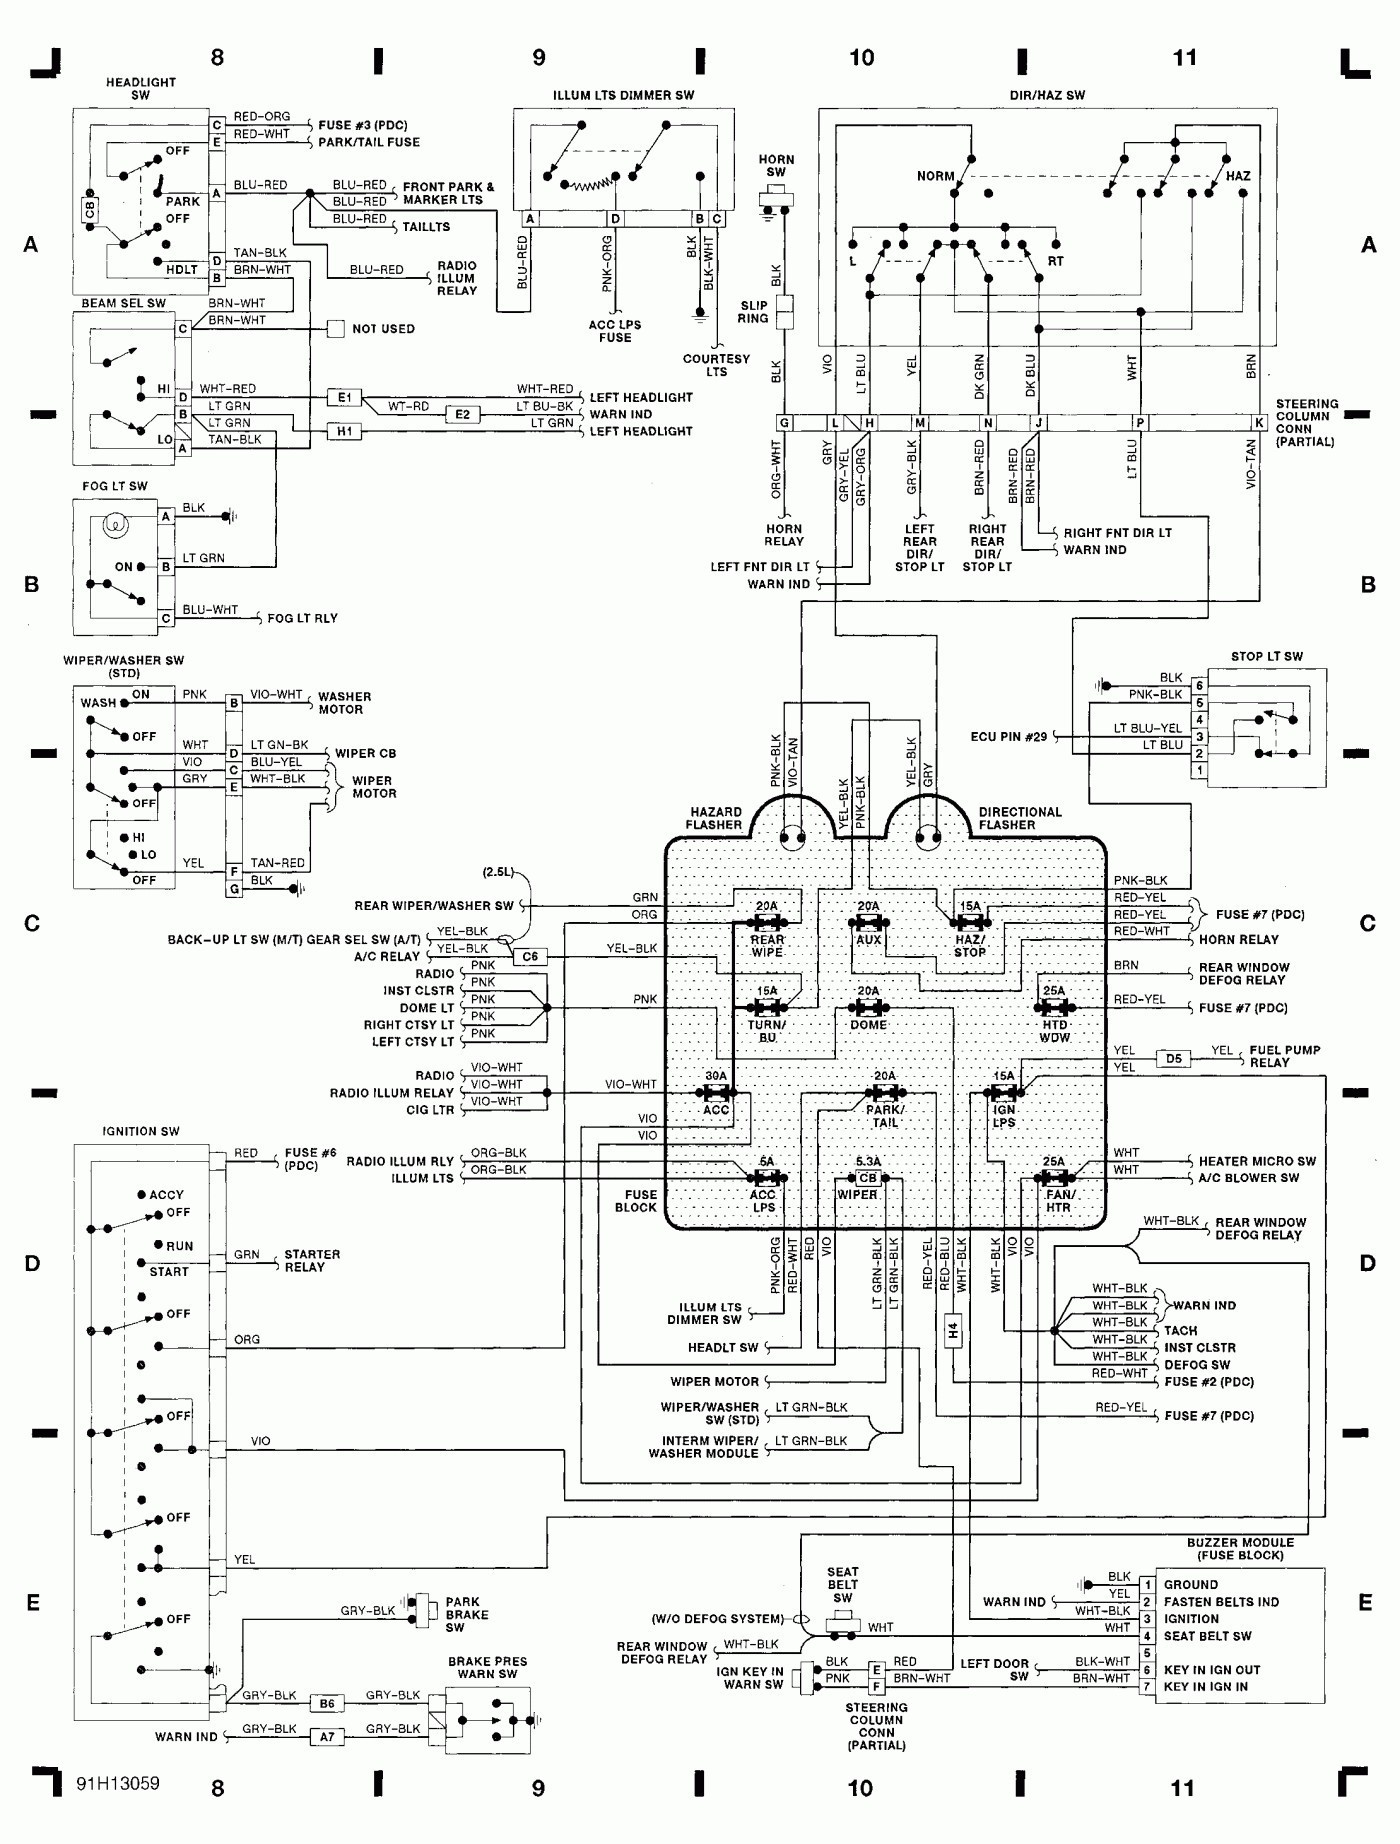 Grote 44890 | Wiring Diagram Image